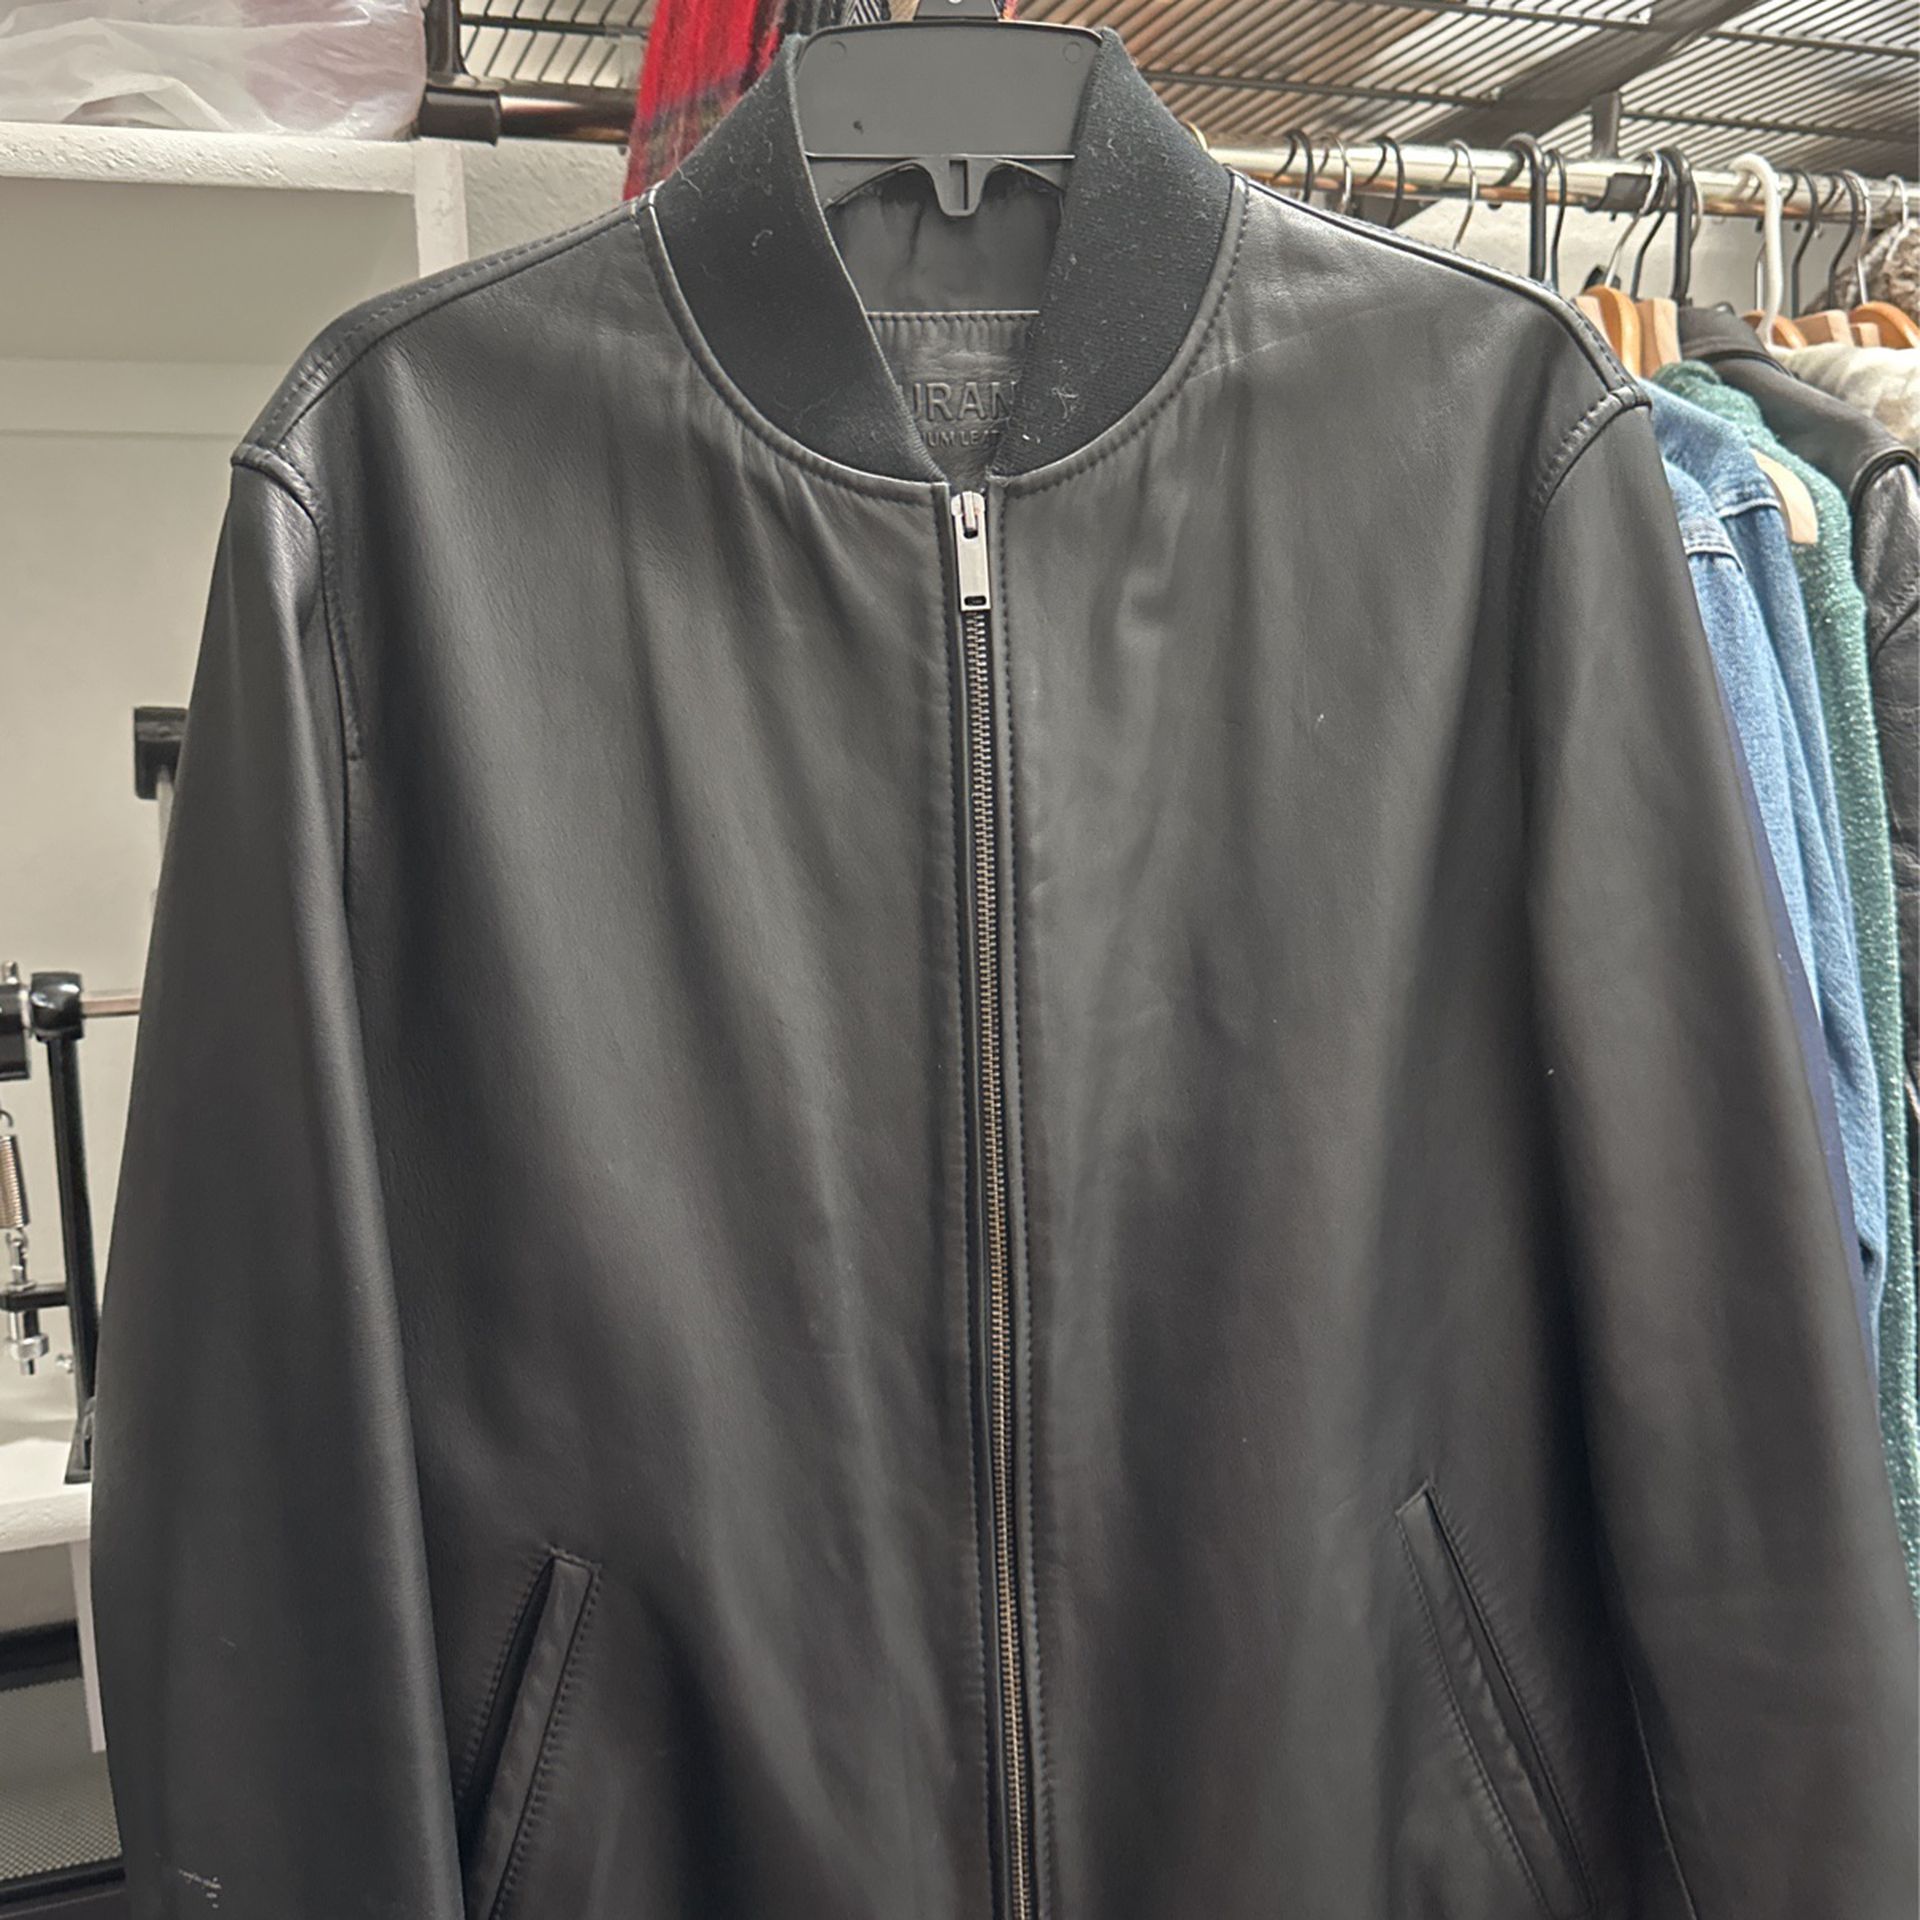 Murano Leather Bomber Jacket 